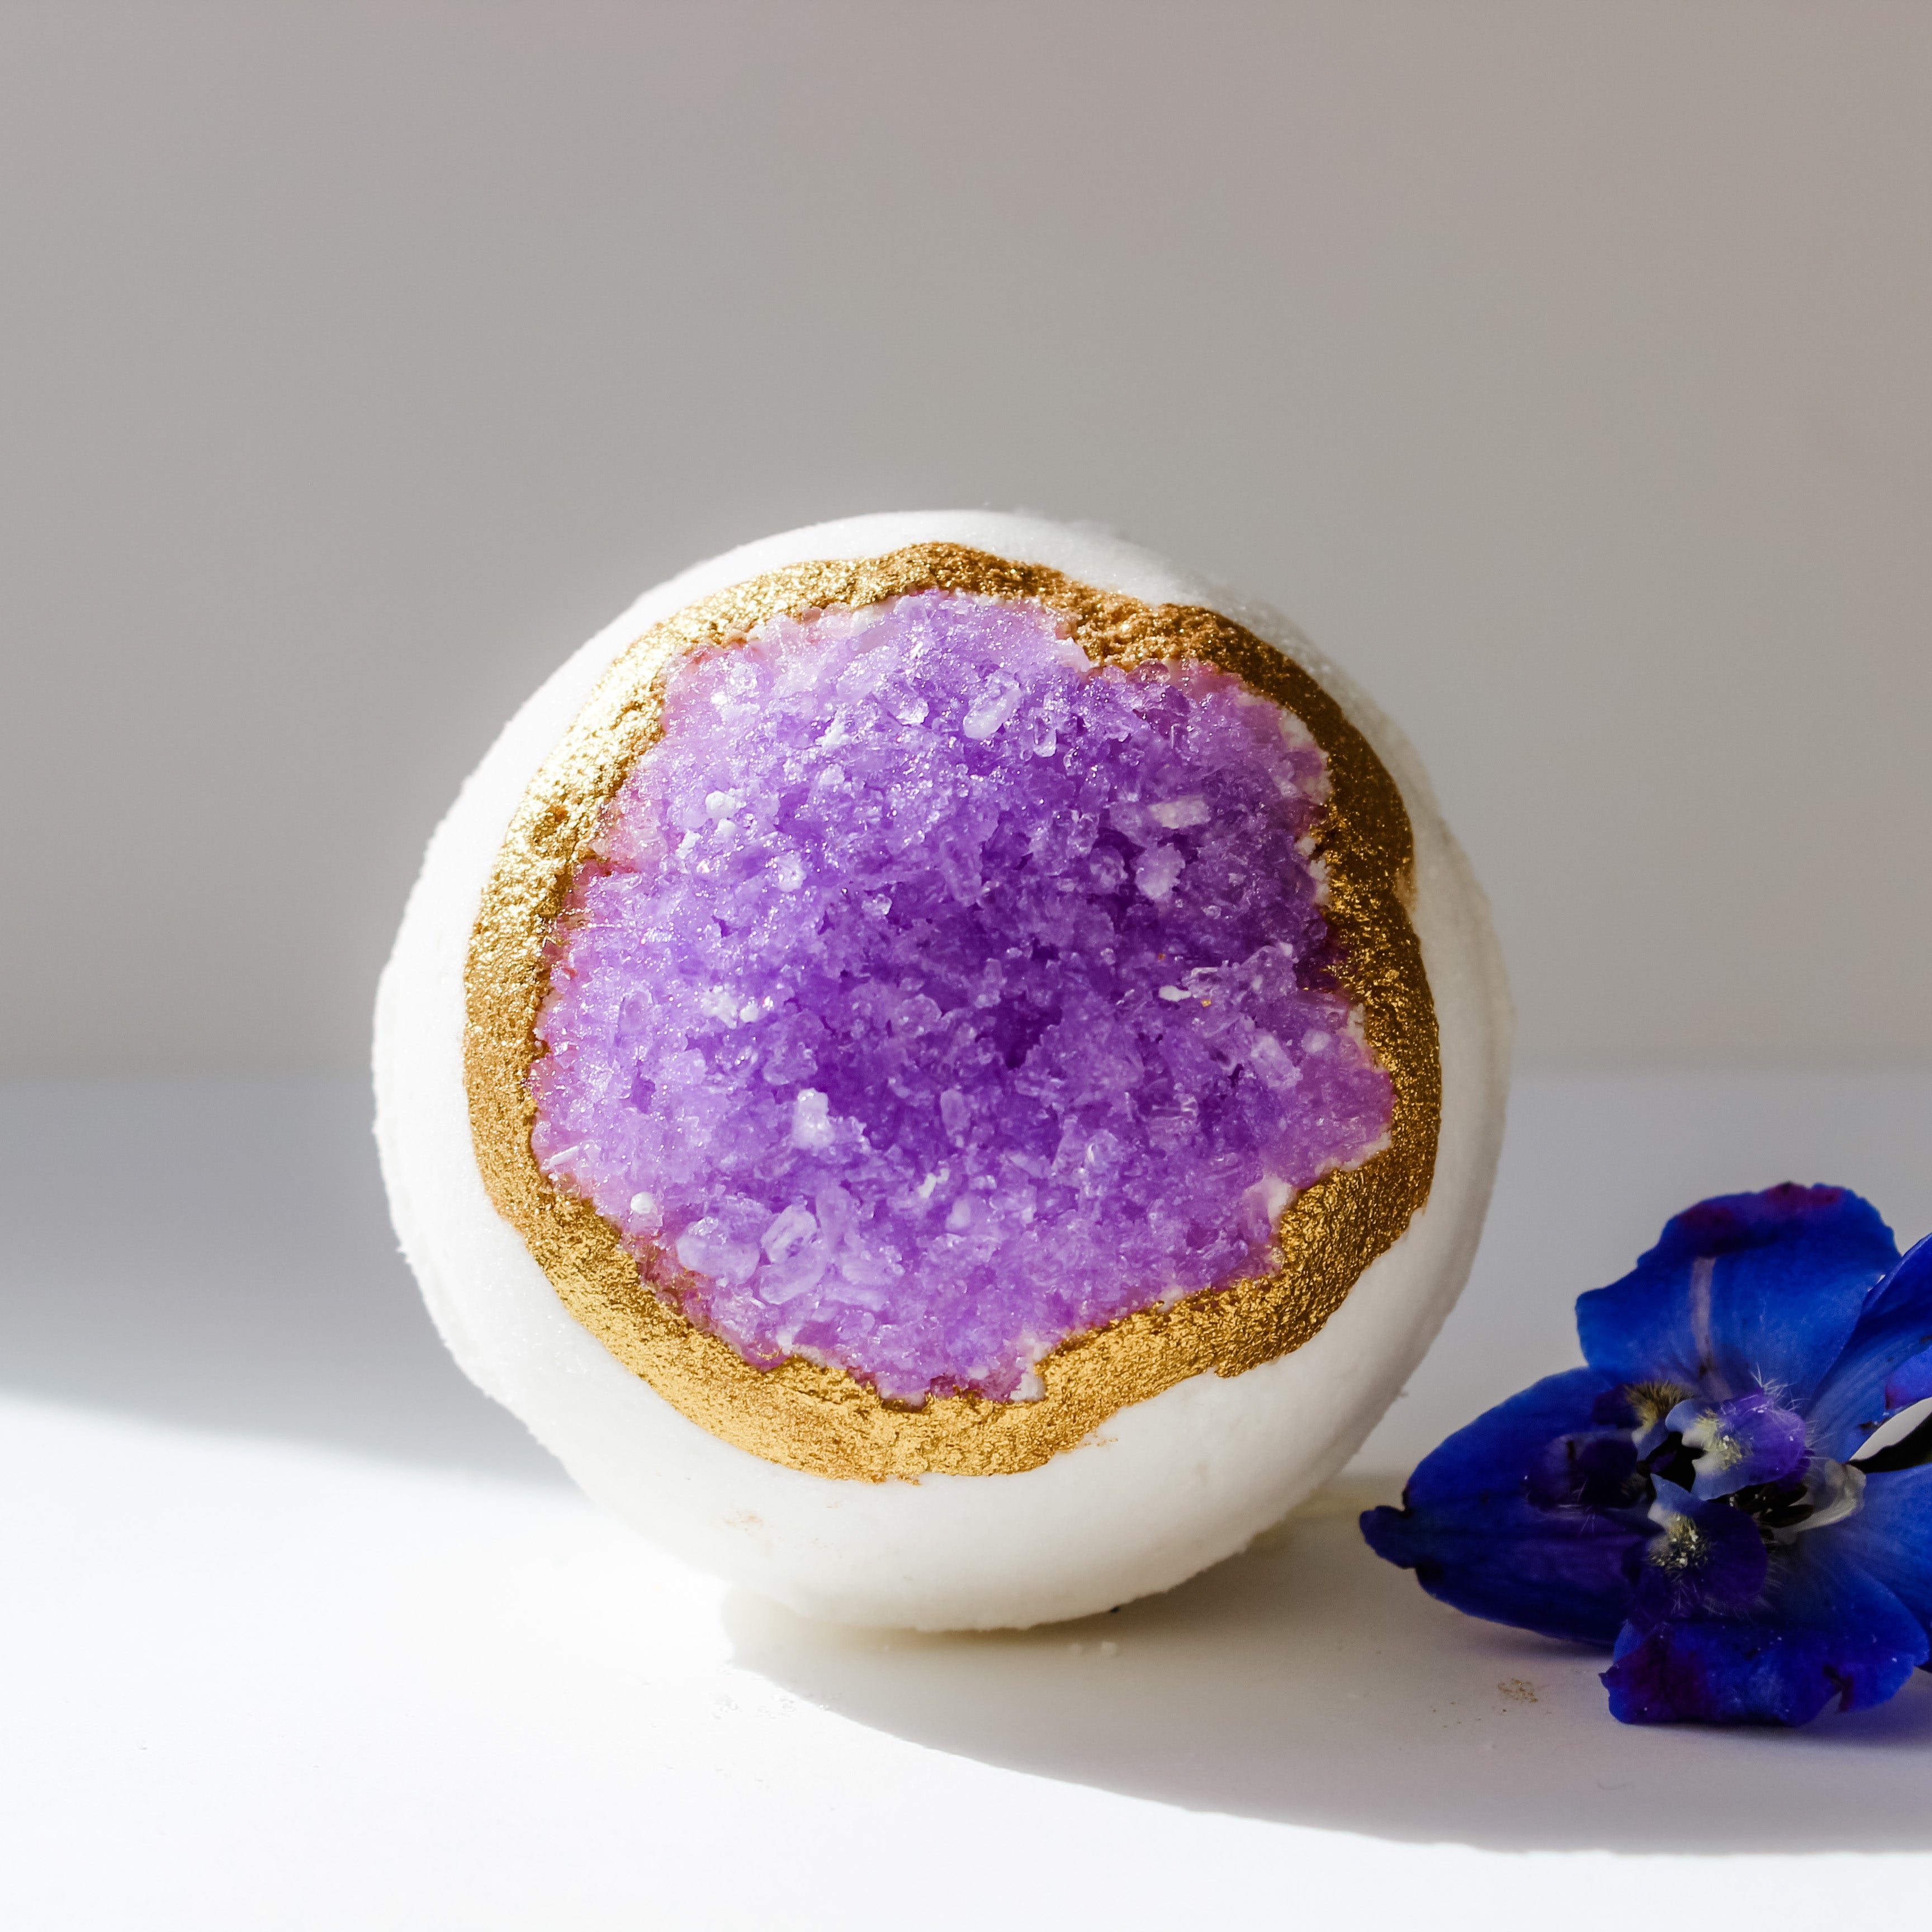 Crystal bath bomb gift set | Hidden Forest Naturals - Handmade with Natural Ingredients. Hidden Forest Naturals